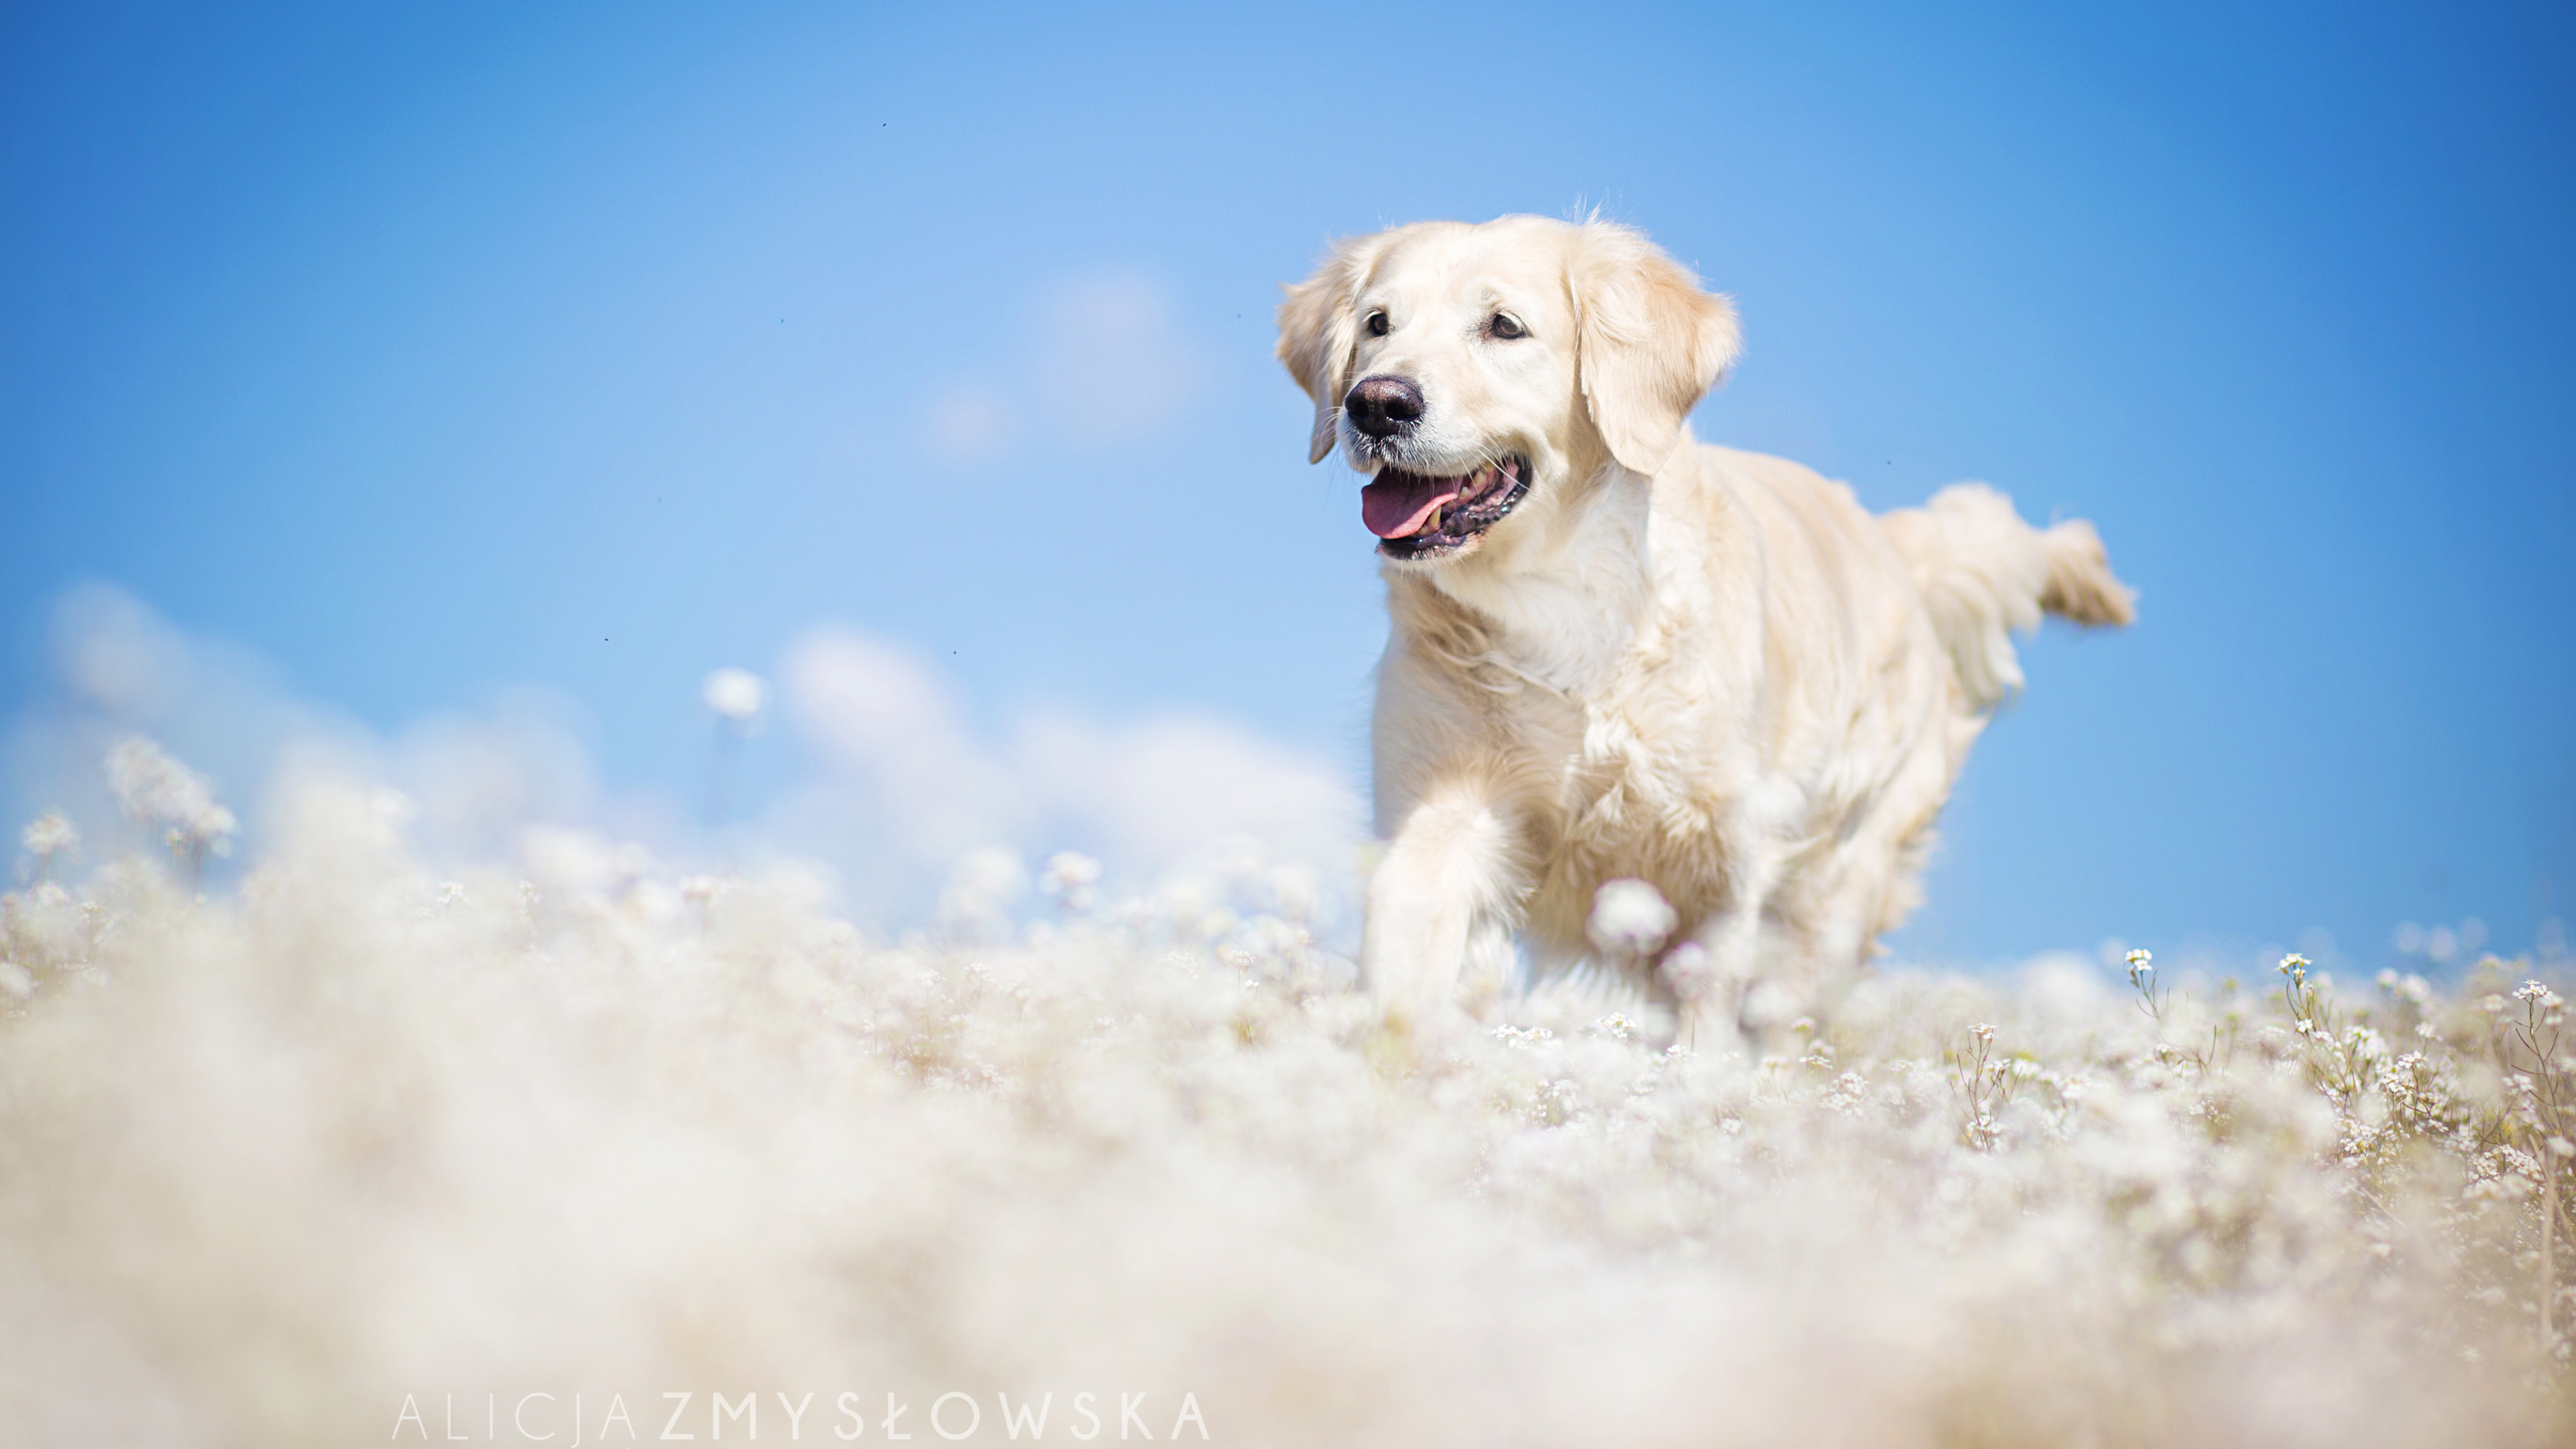 Wallpaper Labrador, dog, field, cute animals, funny 